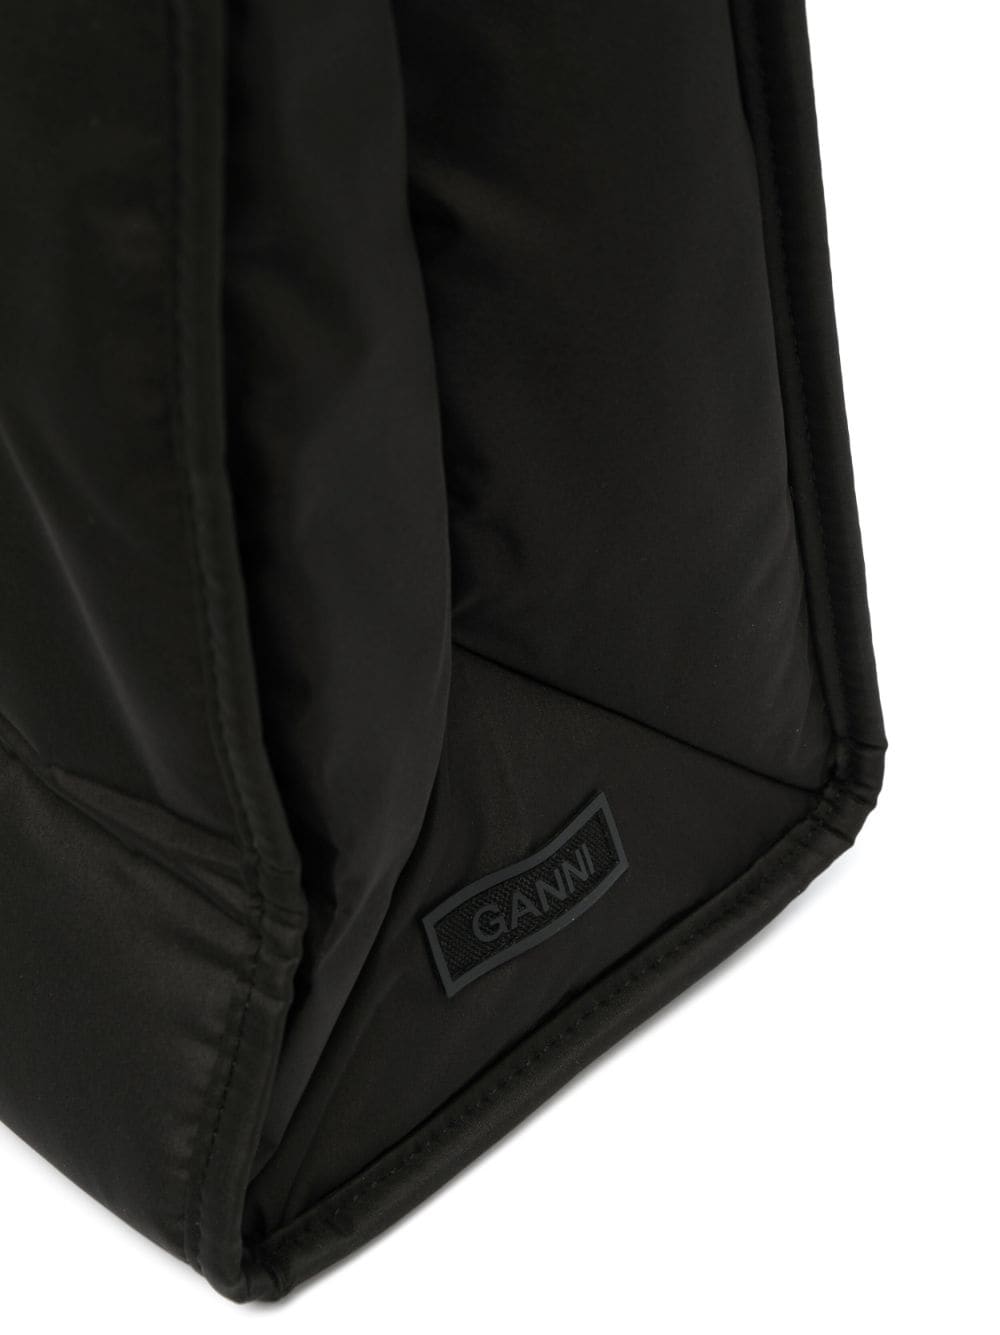 Shop Ganni Medium Tech Tote Bag In Black